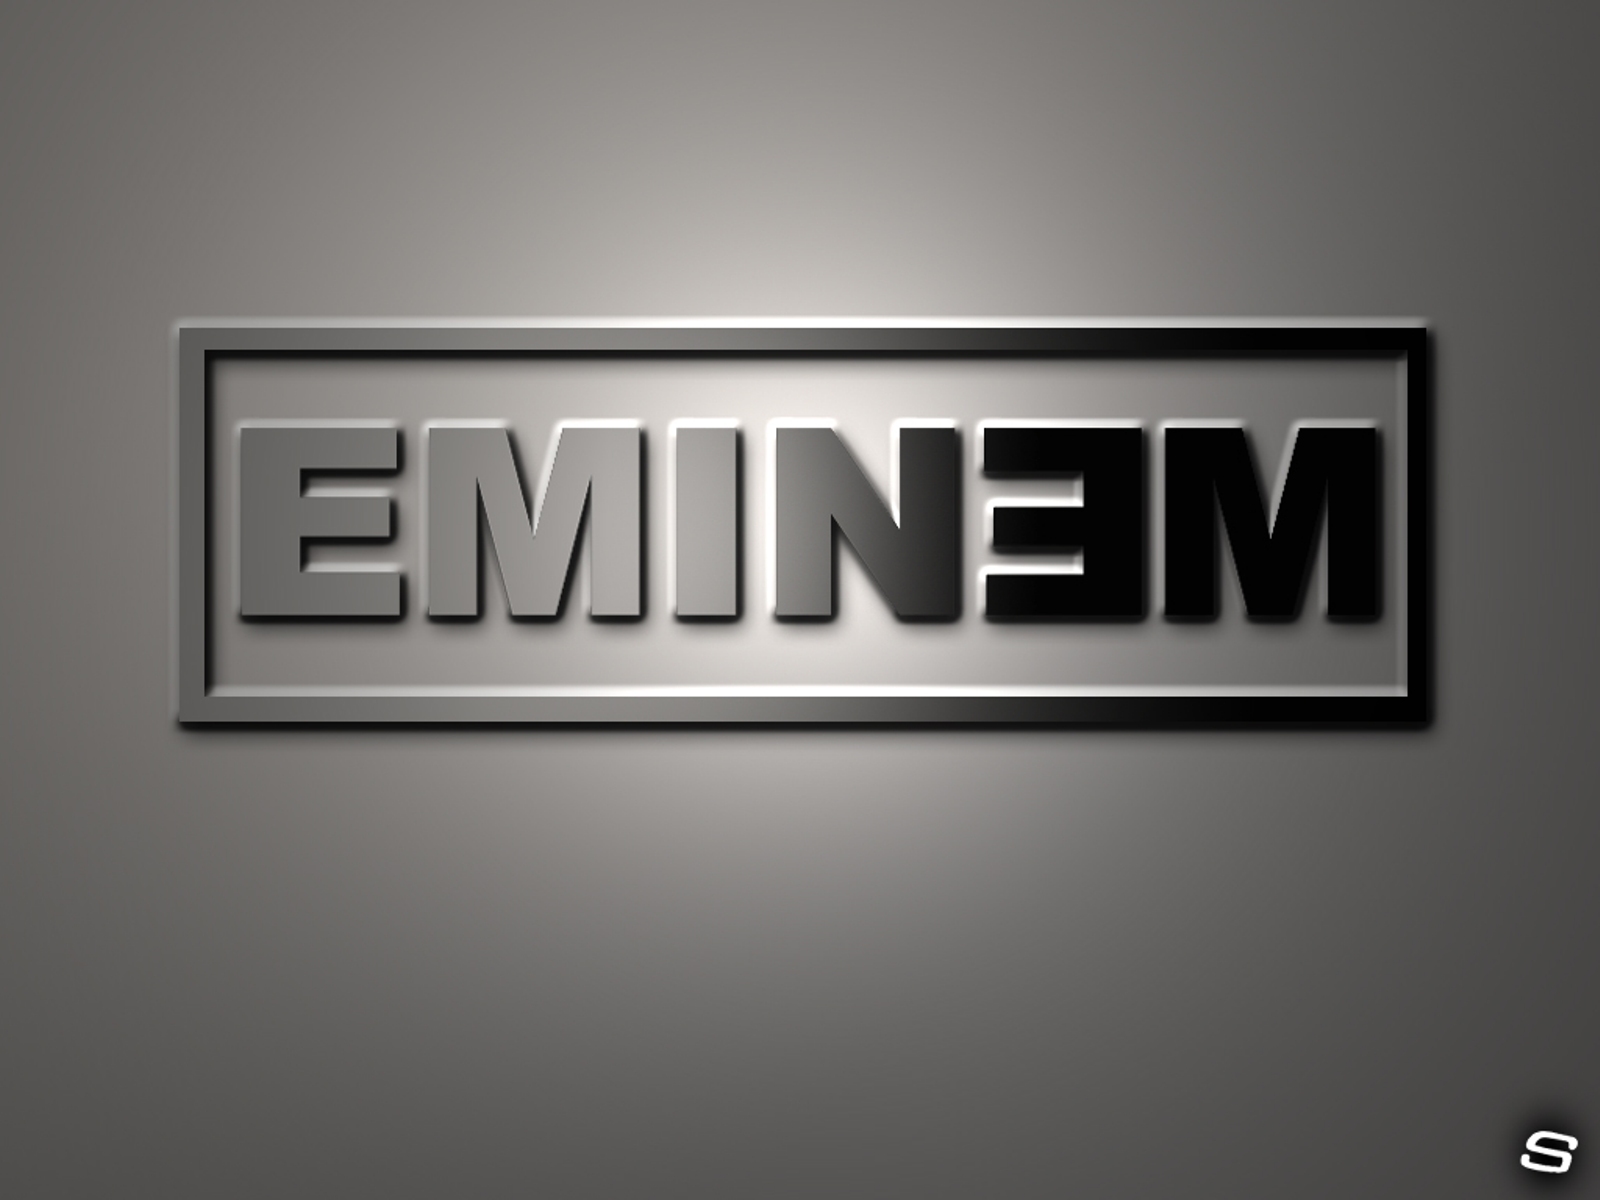  Eminem Cellphone FHD pic